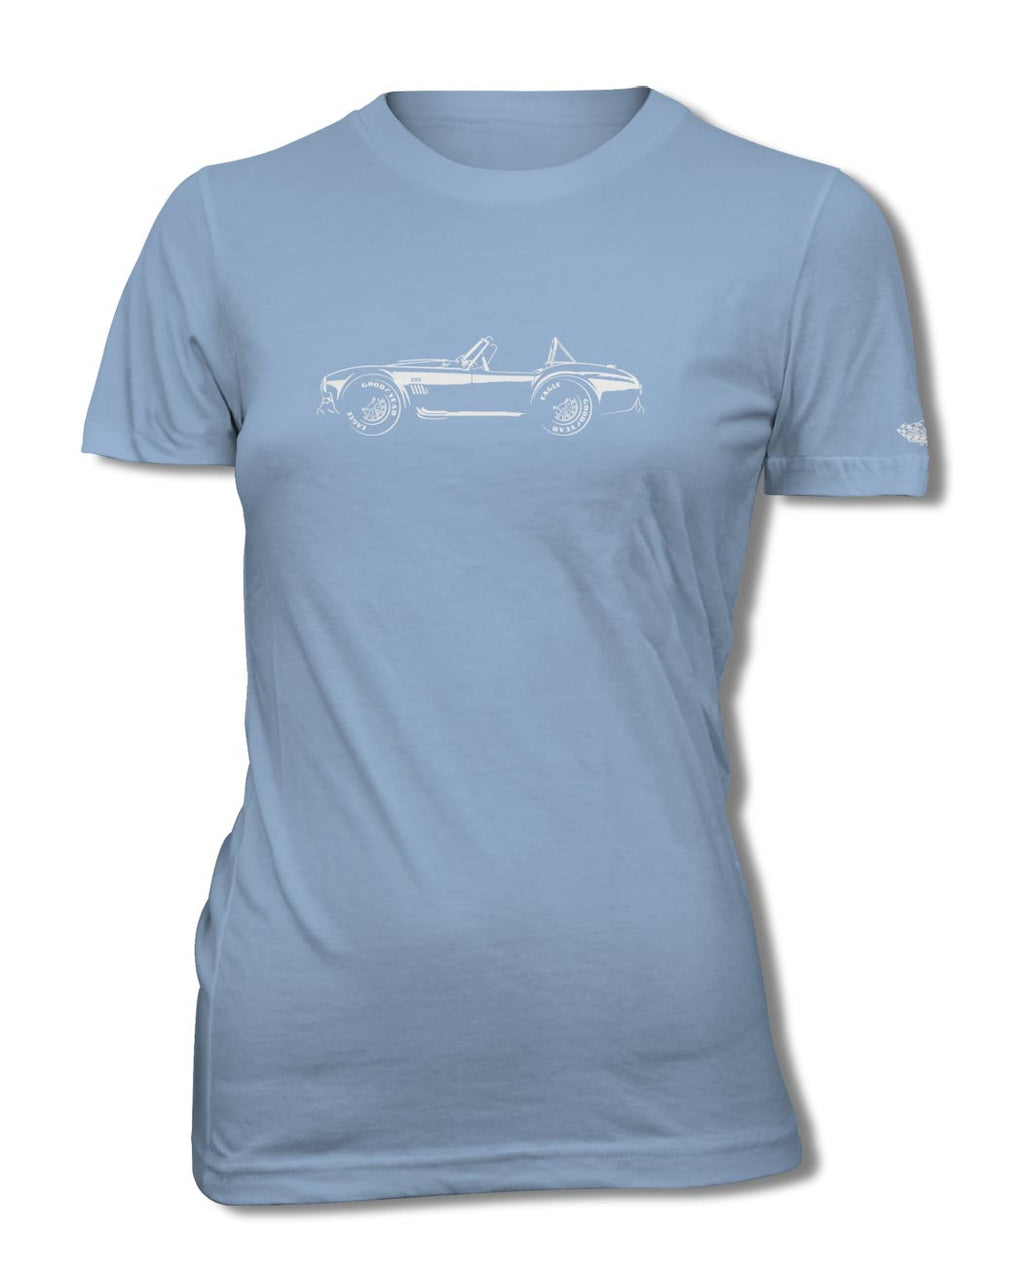 1965 AC Shelby Cobra 427 SC Side View T-Shirt - Women